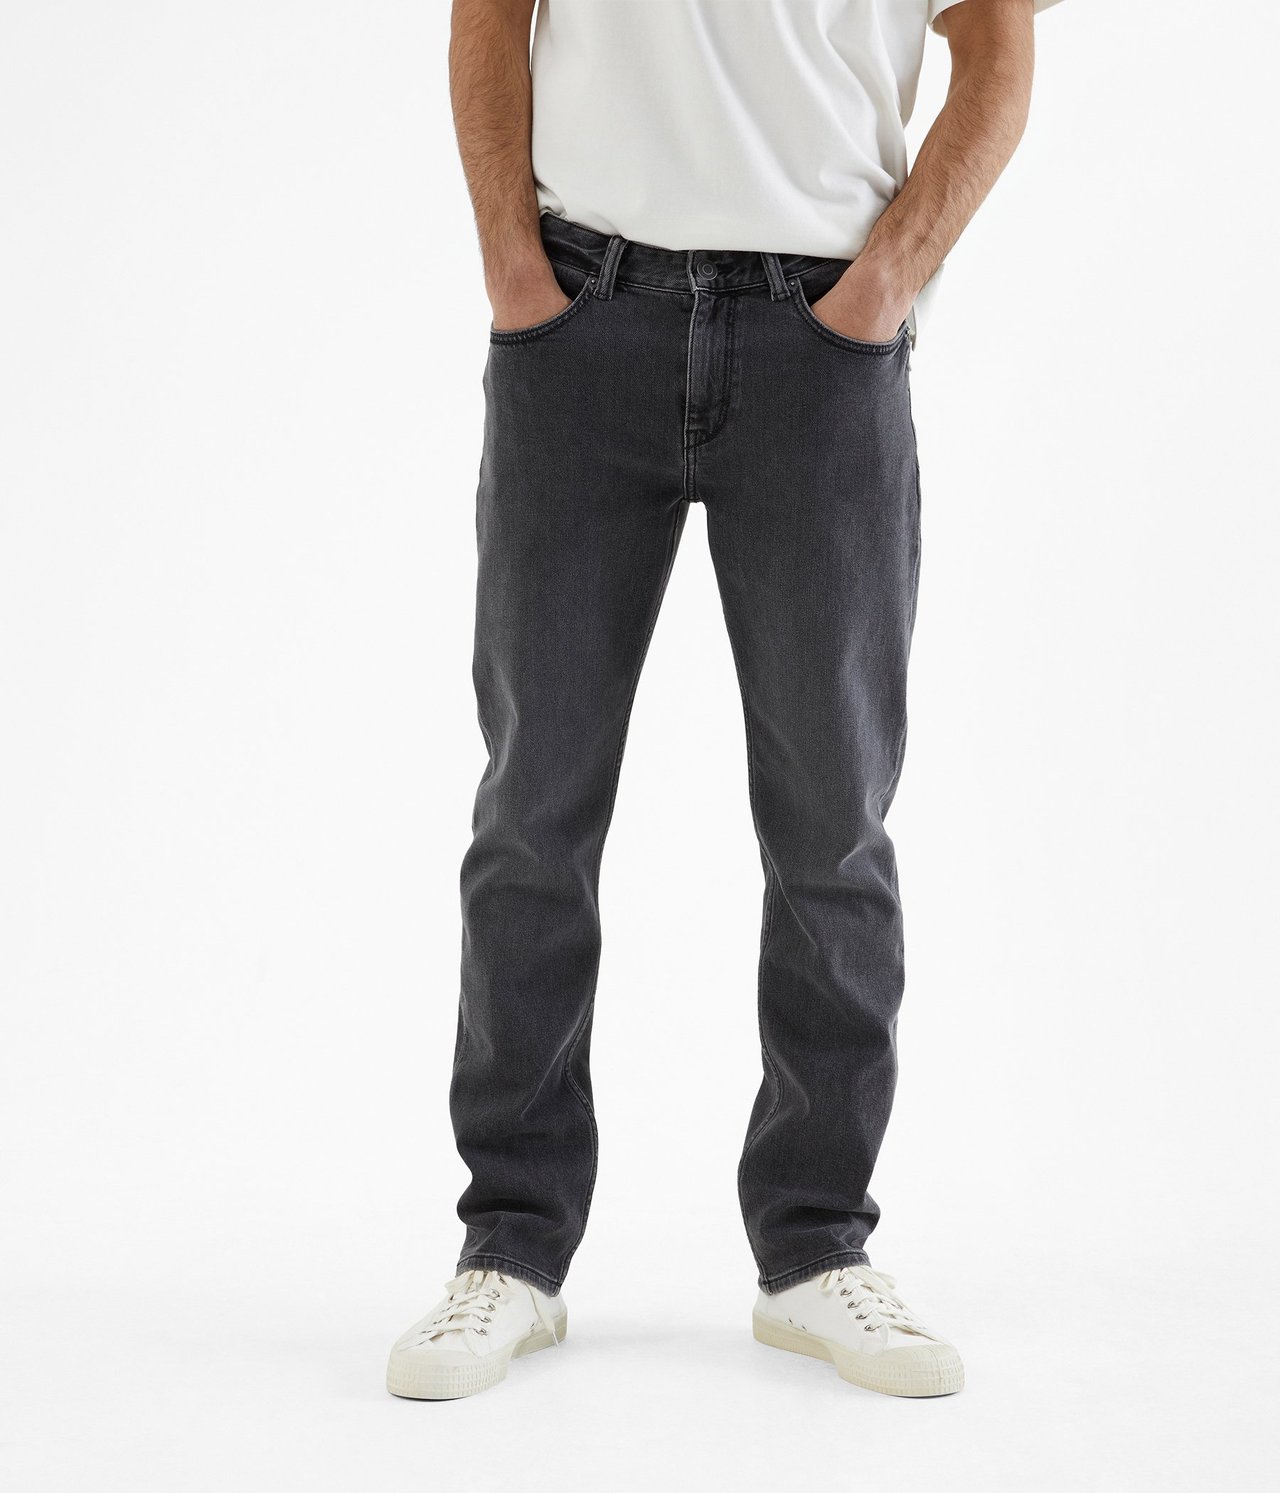 Hank regular jeans - Hopeanharmaa - 187cm / Storlek: 33/34 - 1